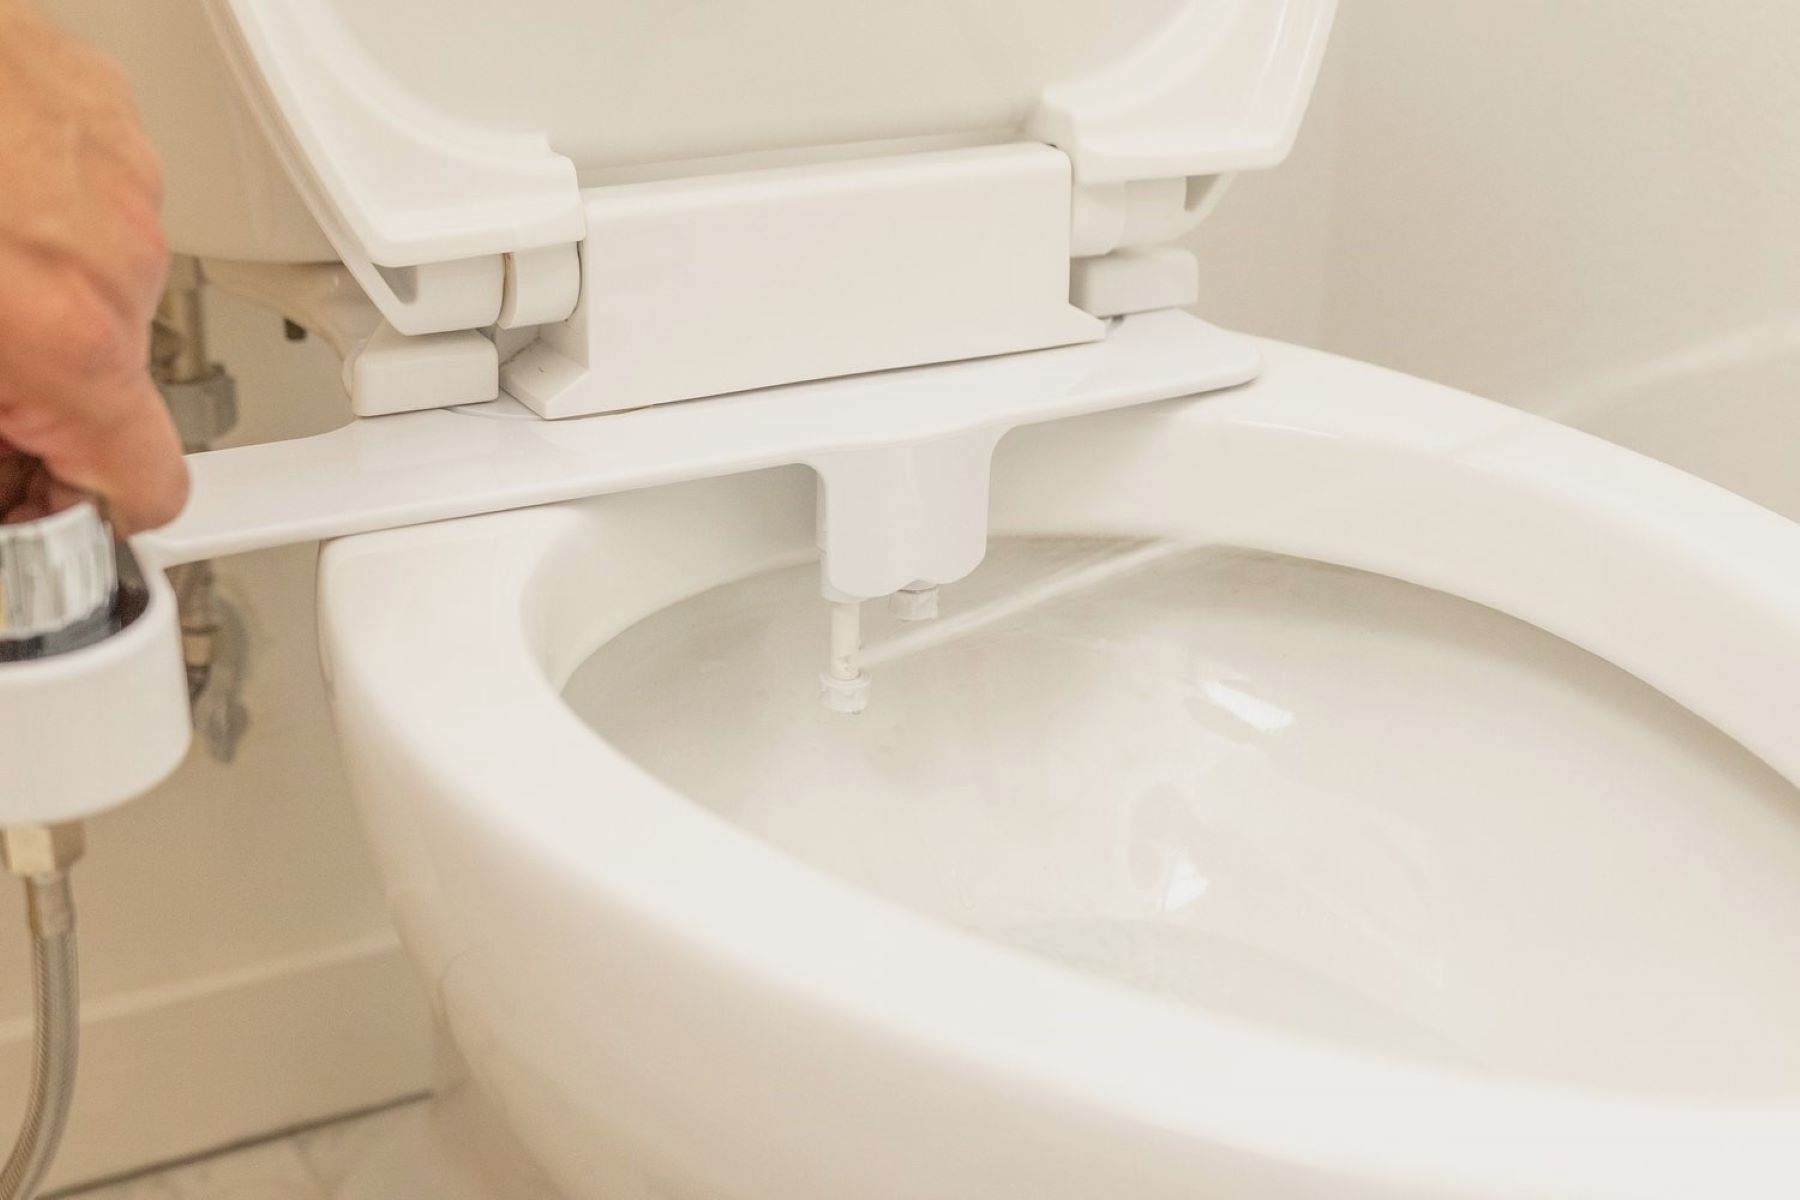 Bidet Toilet: How To Install